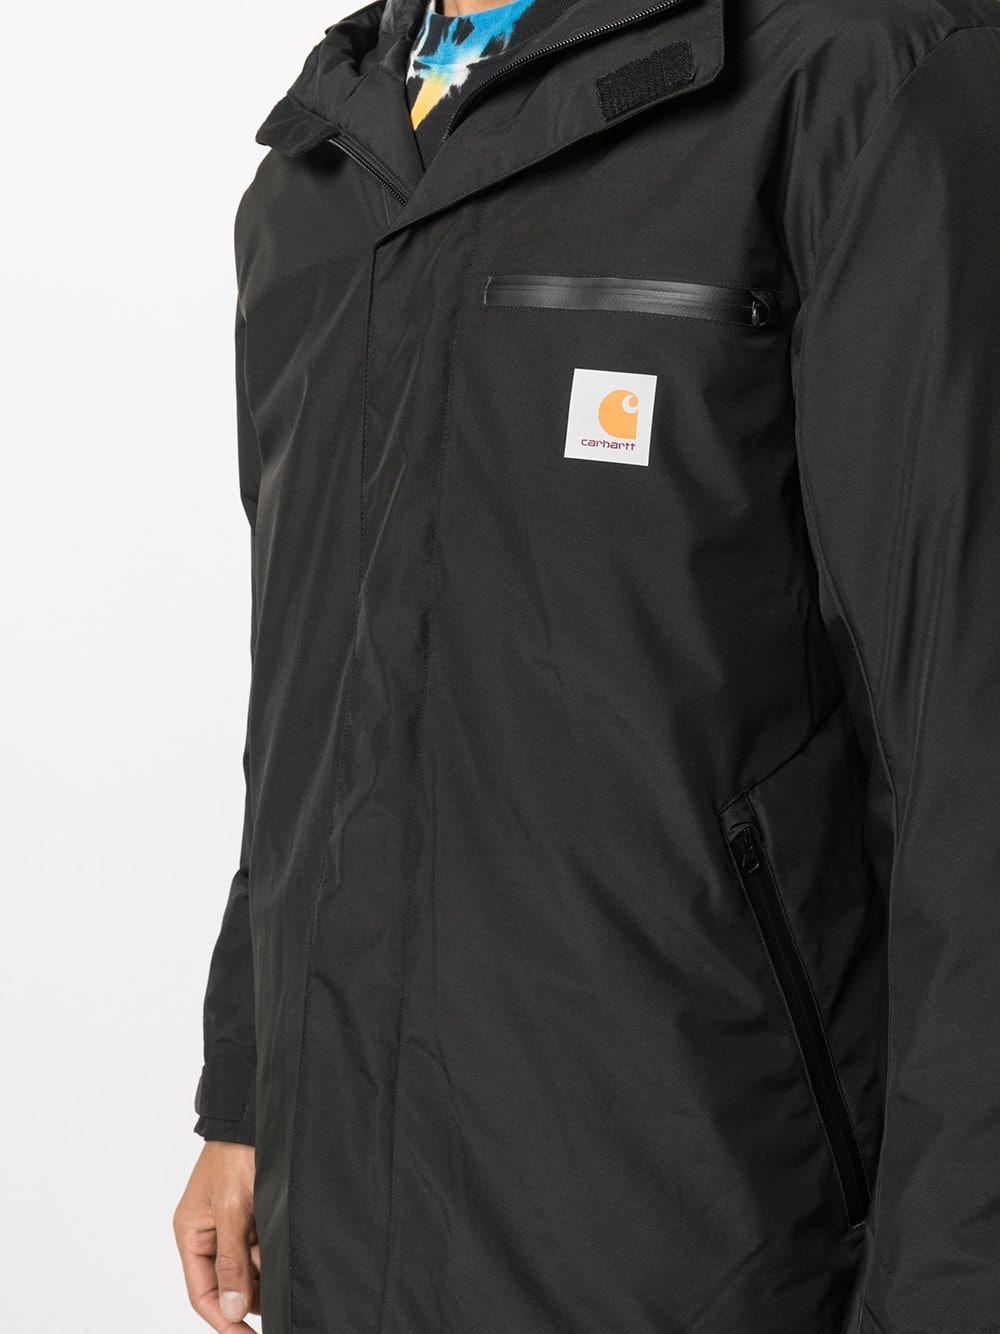 Carhartt WIP Gore-tex Infinium Parka Coat in Black for Men - Lyst